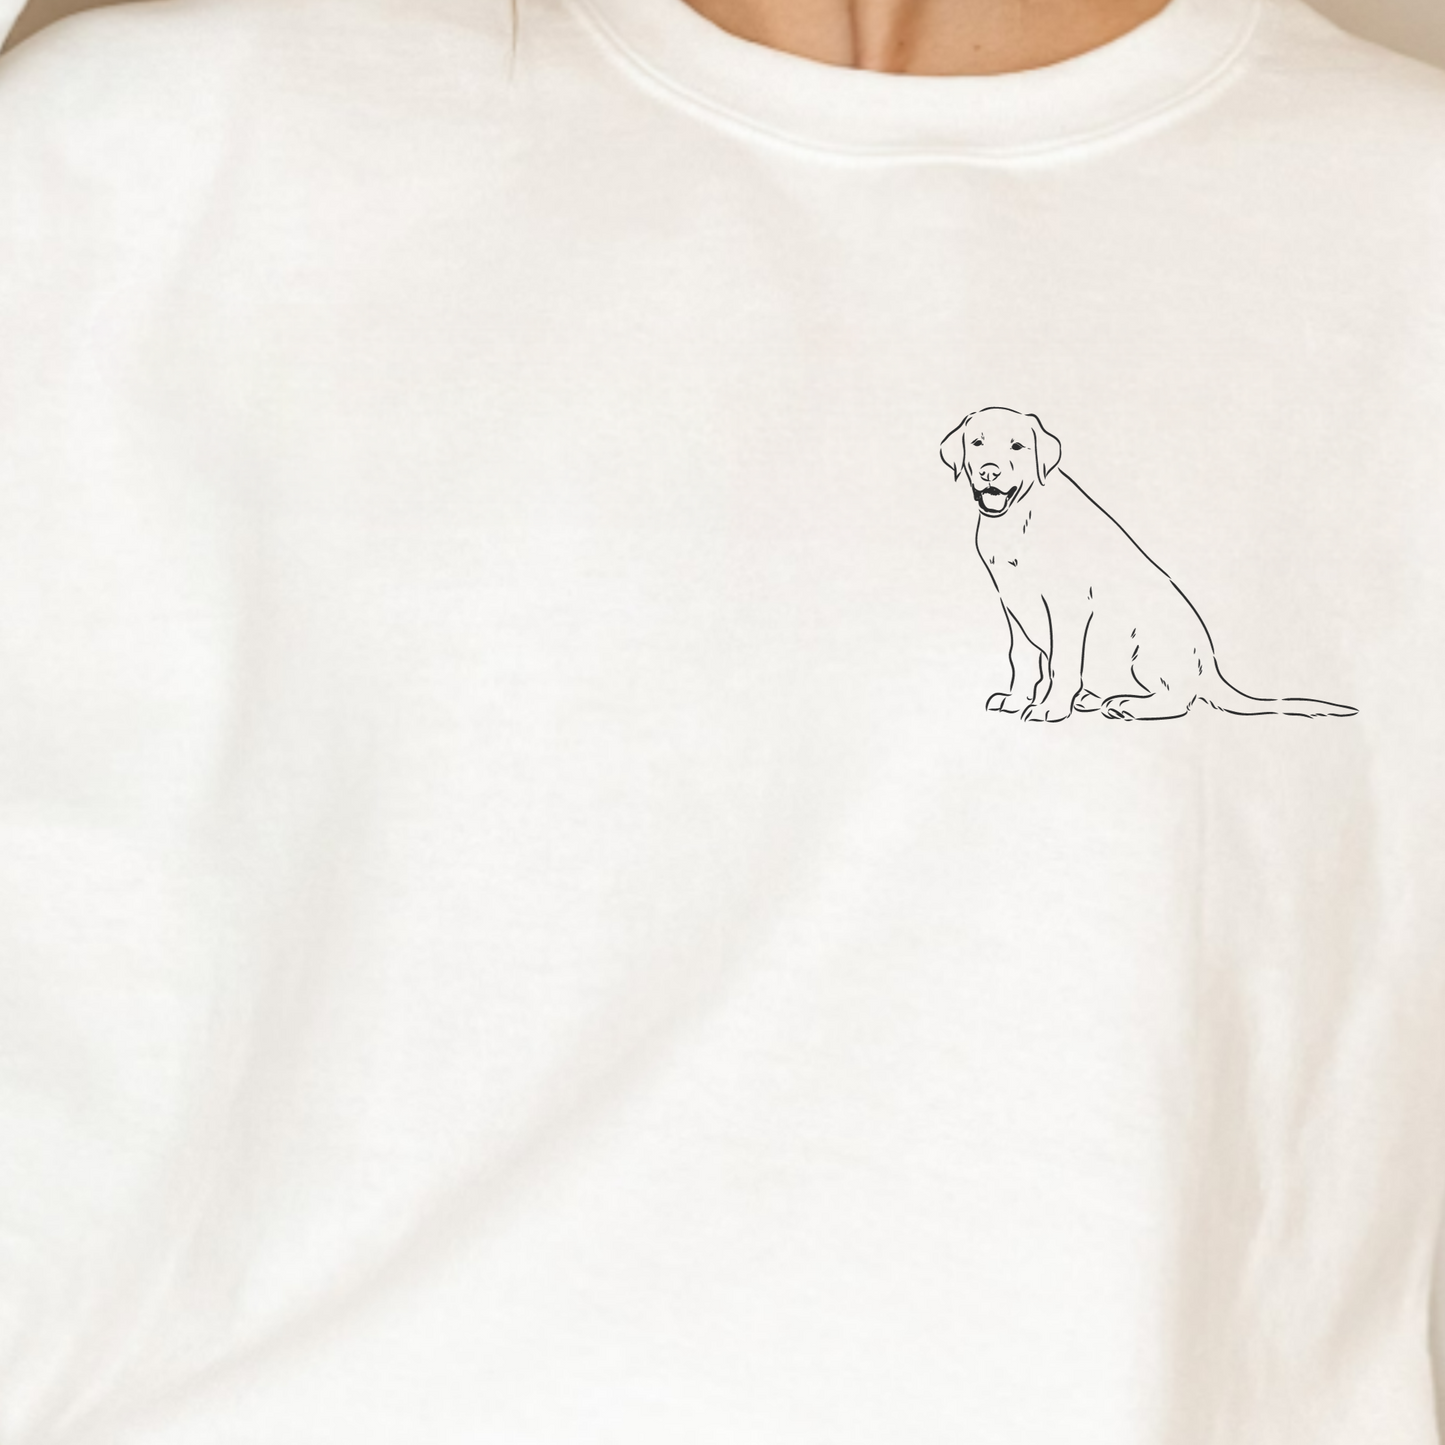 (Shirt not included) Labrador POCKET - Clear Film Transfer